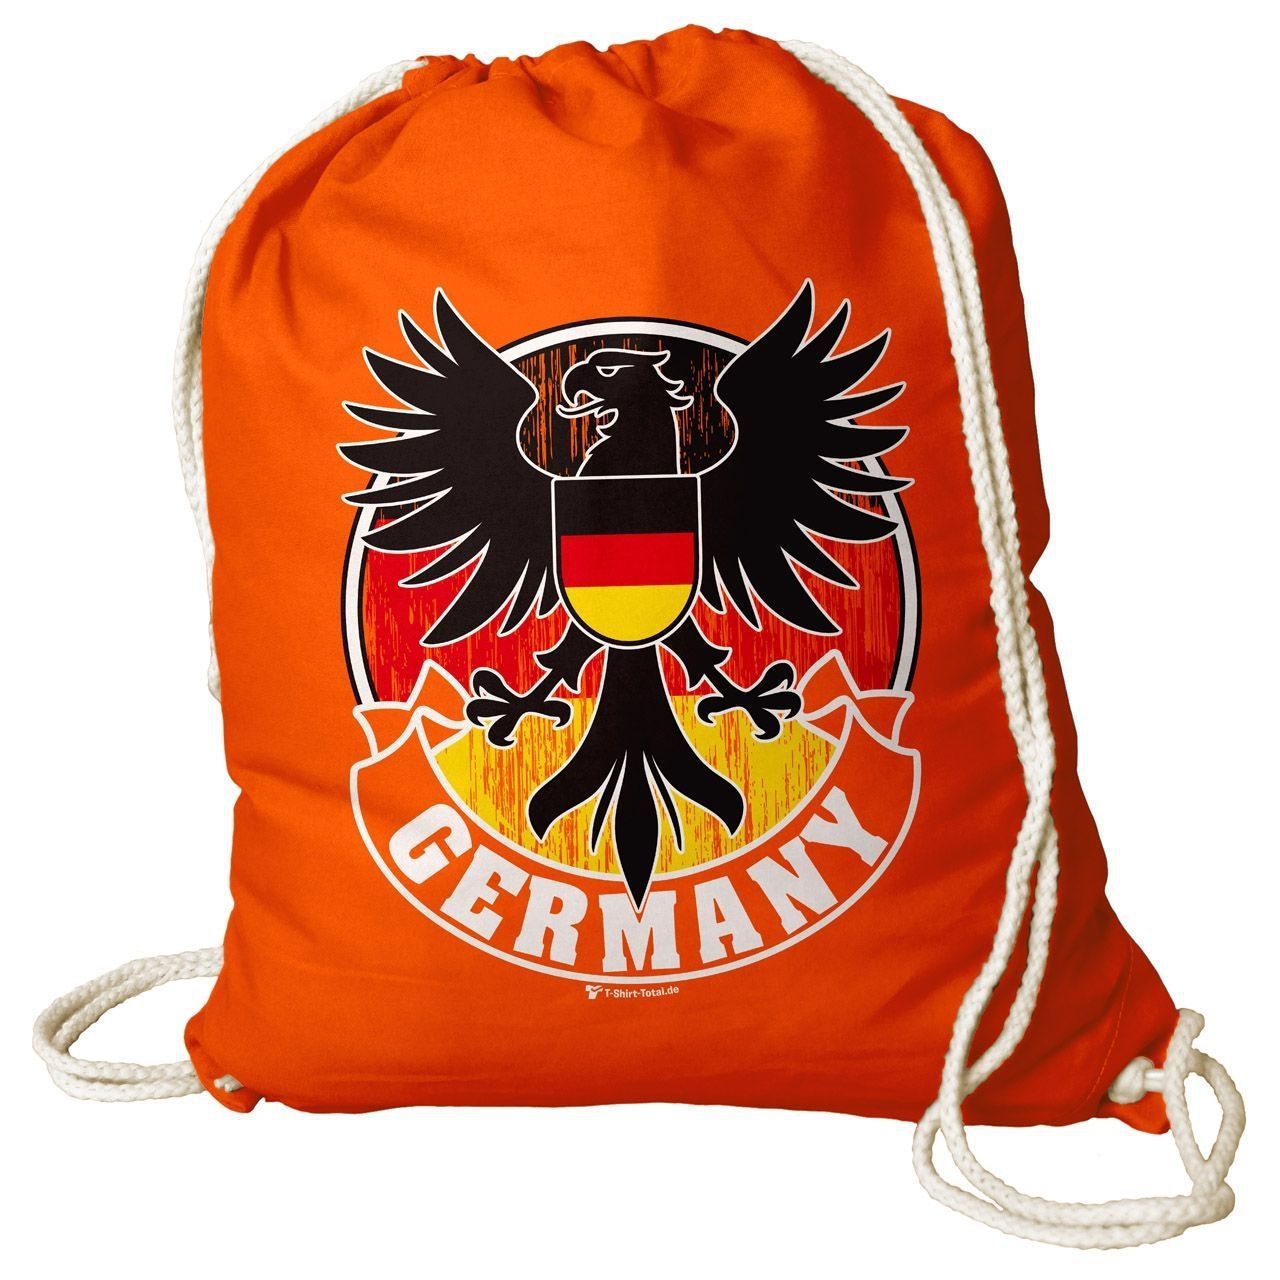 Germany Adler Rucksack Beutel orange